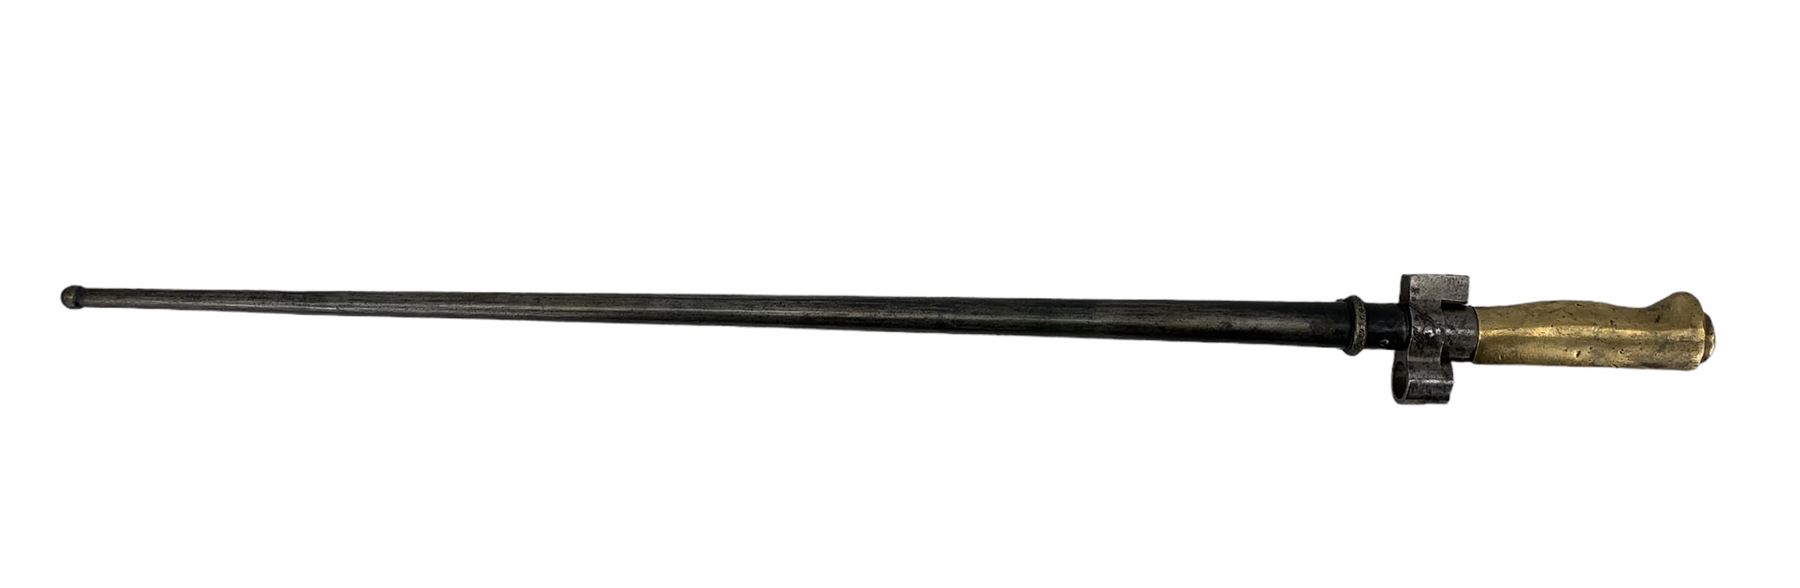 French model 1886 Lebel bayonet with cruciform blade - Image 2 of 4